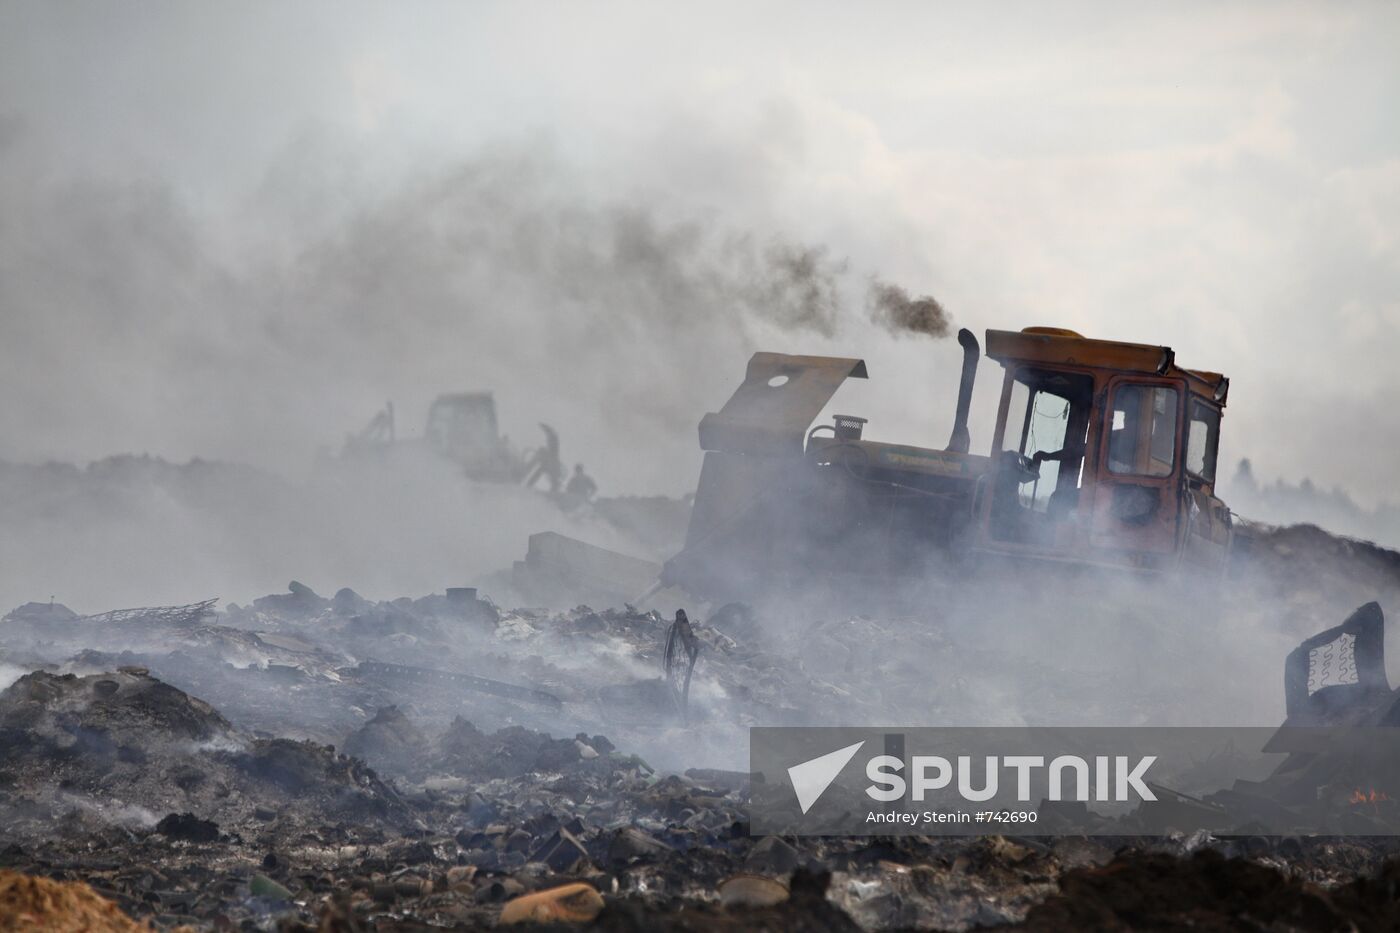 Saburovo household waste dump on fire in Moscow Region